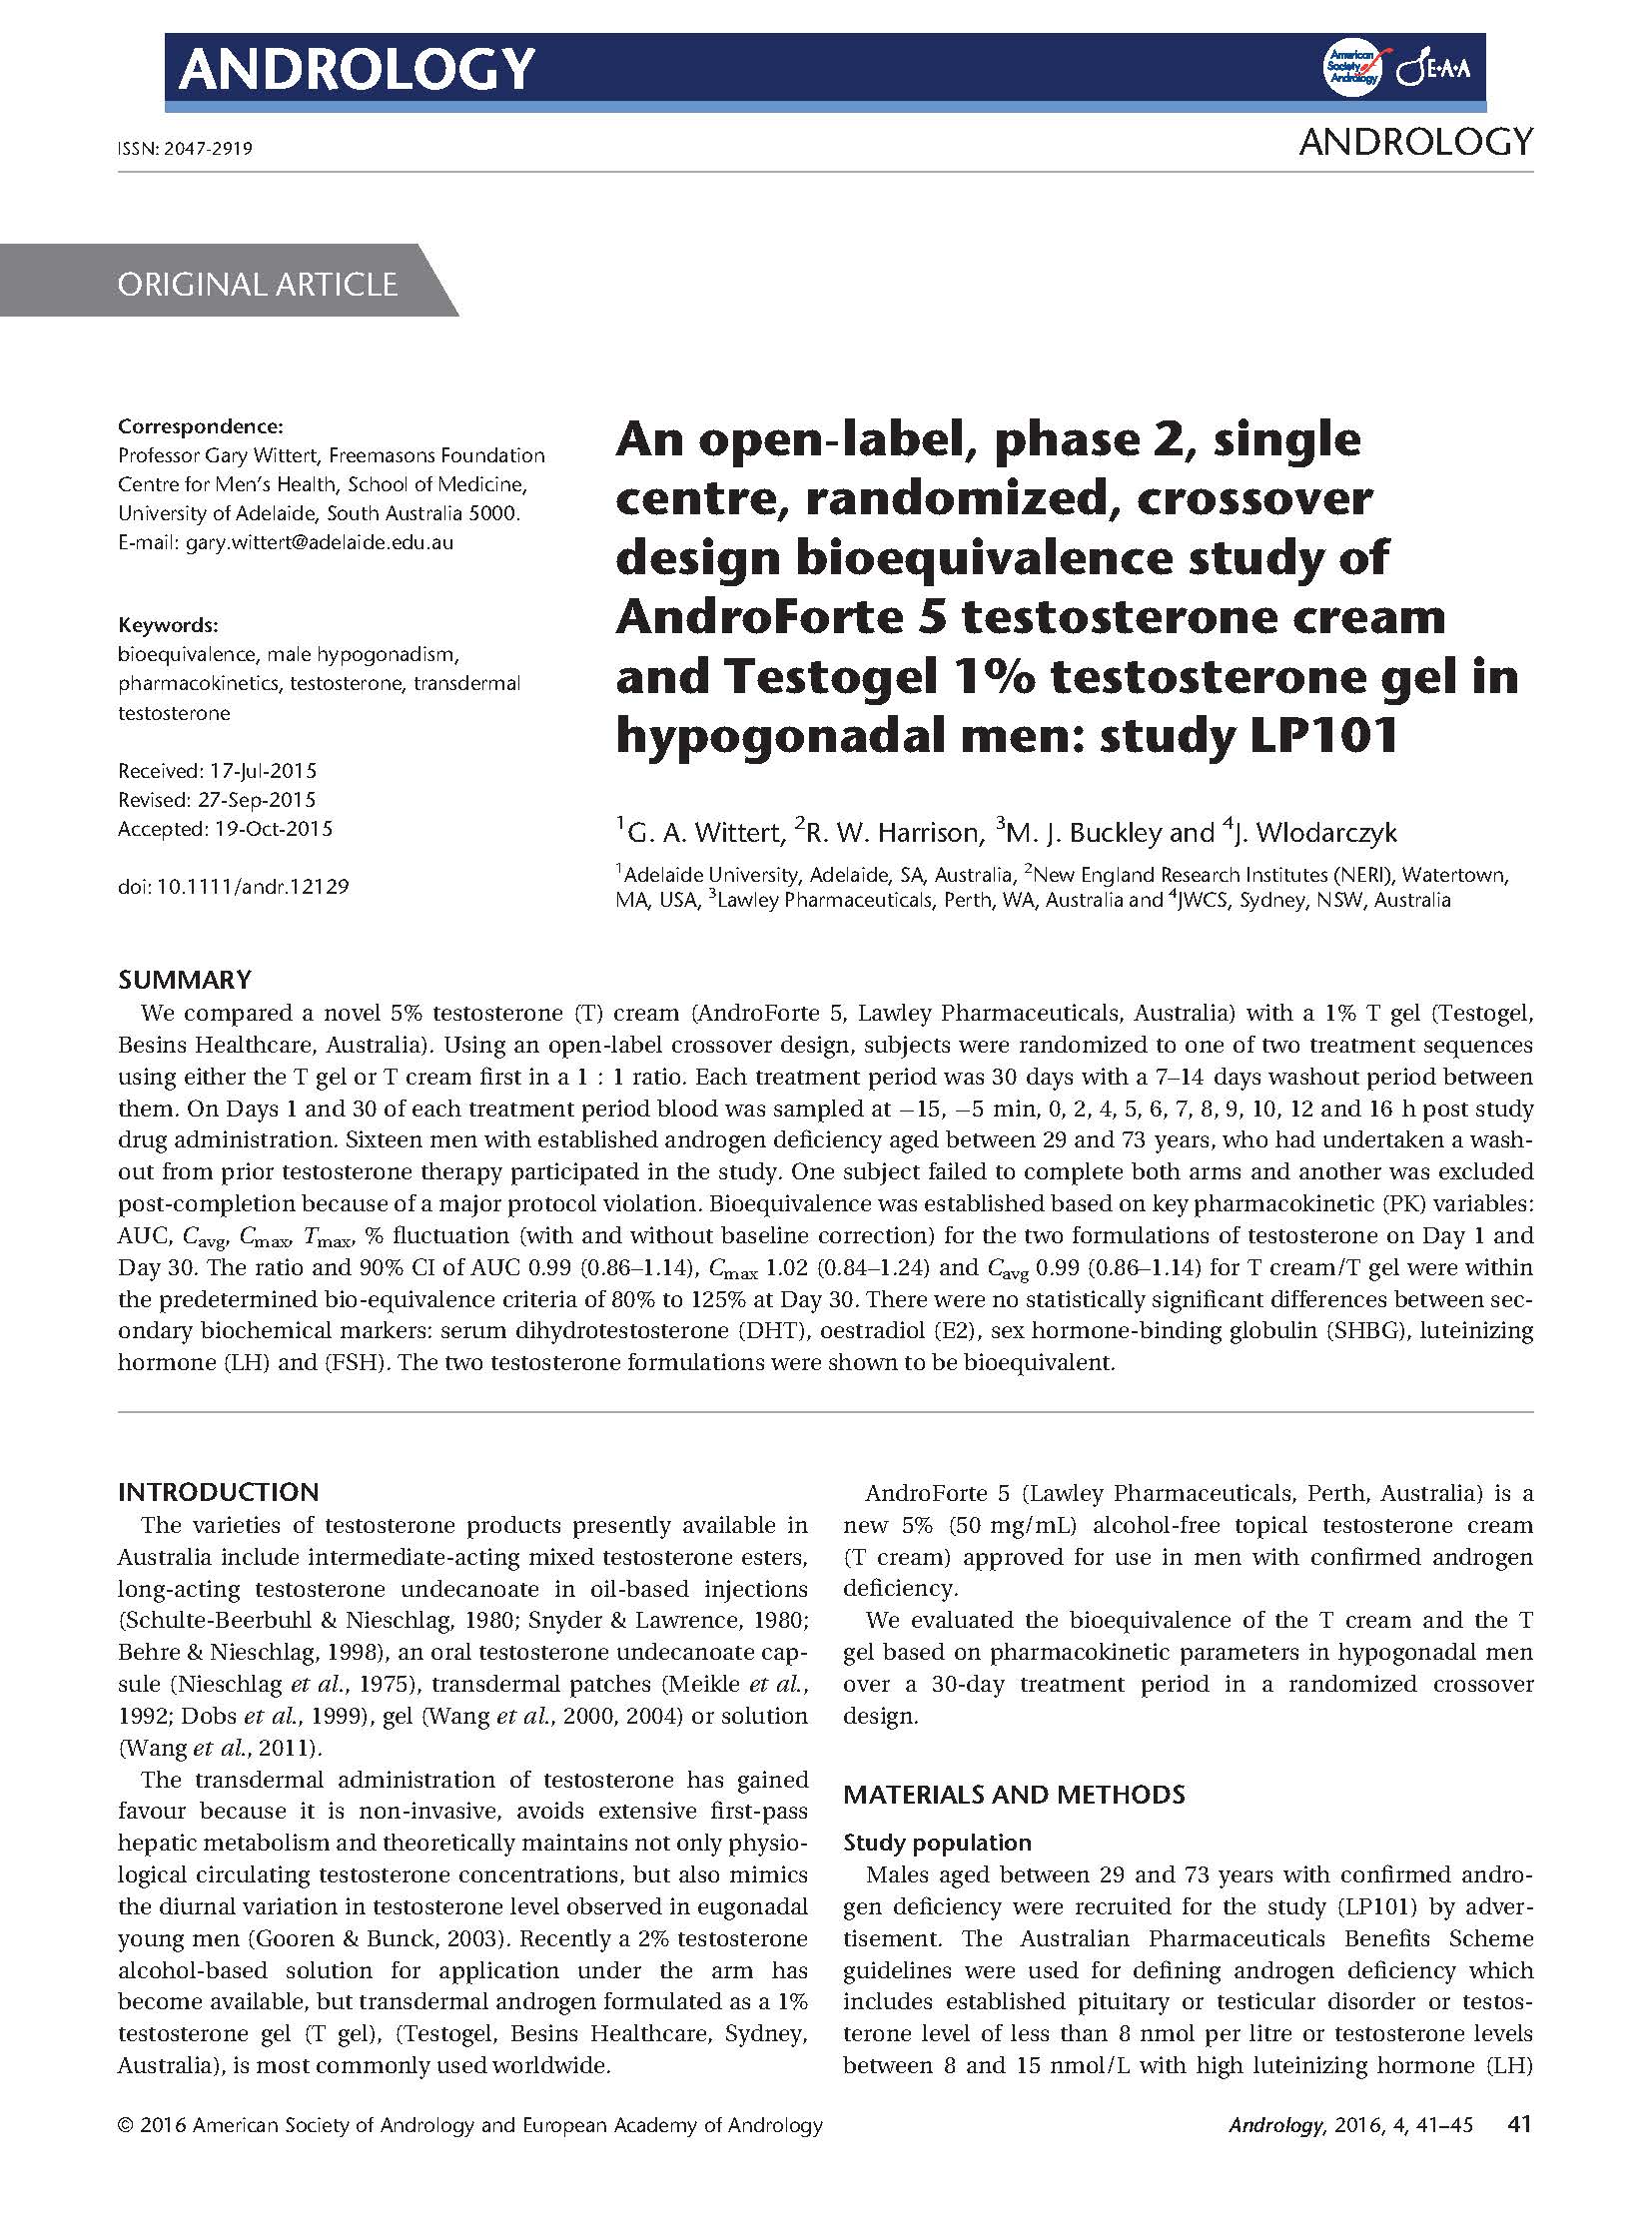 An open-label, phase 2, single centre, randomized, crossover design bioequivalence study of AndroForte 5 testosterone cream and Testogel 1% testosterone gel in hypogonadal men: study LP101